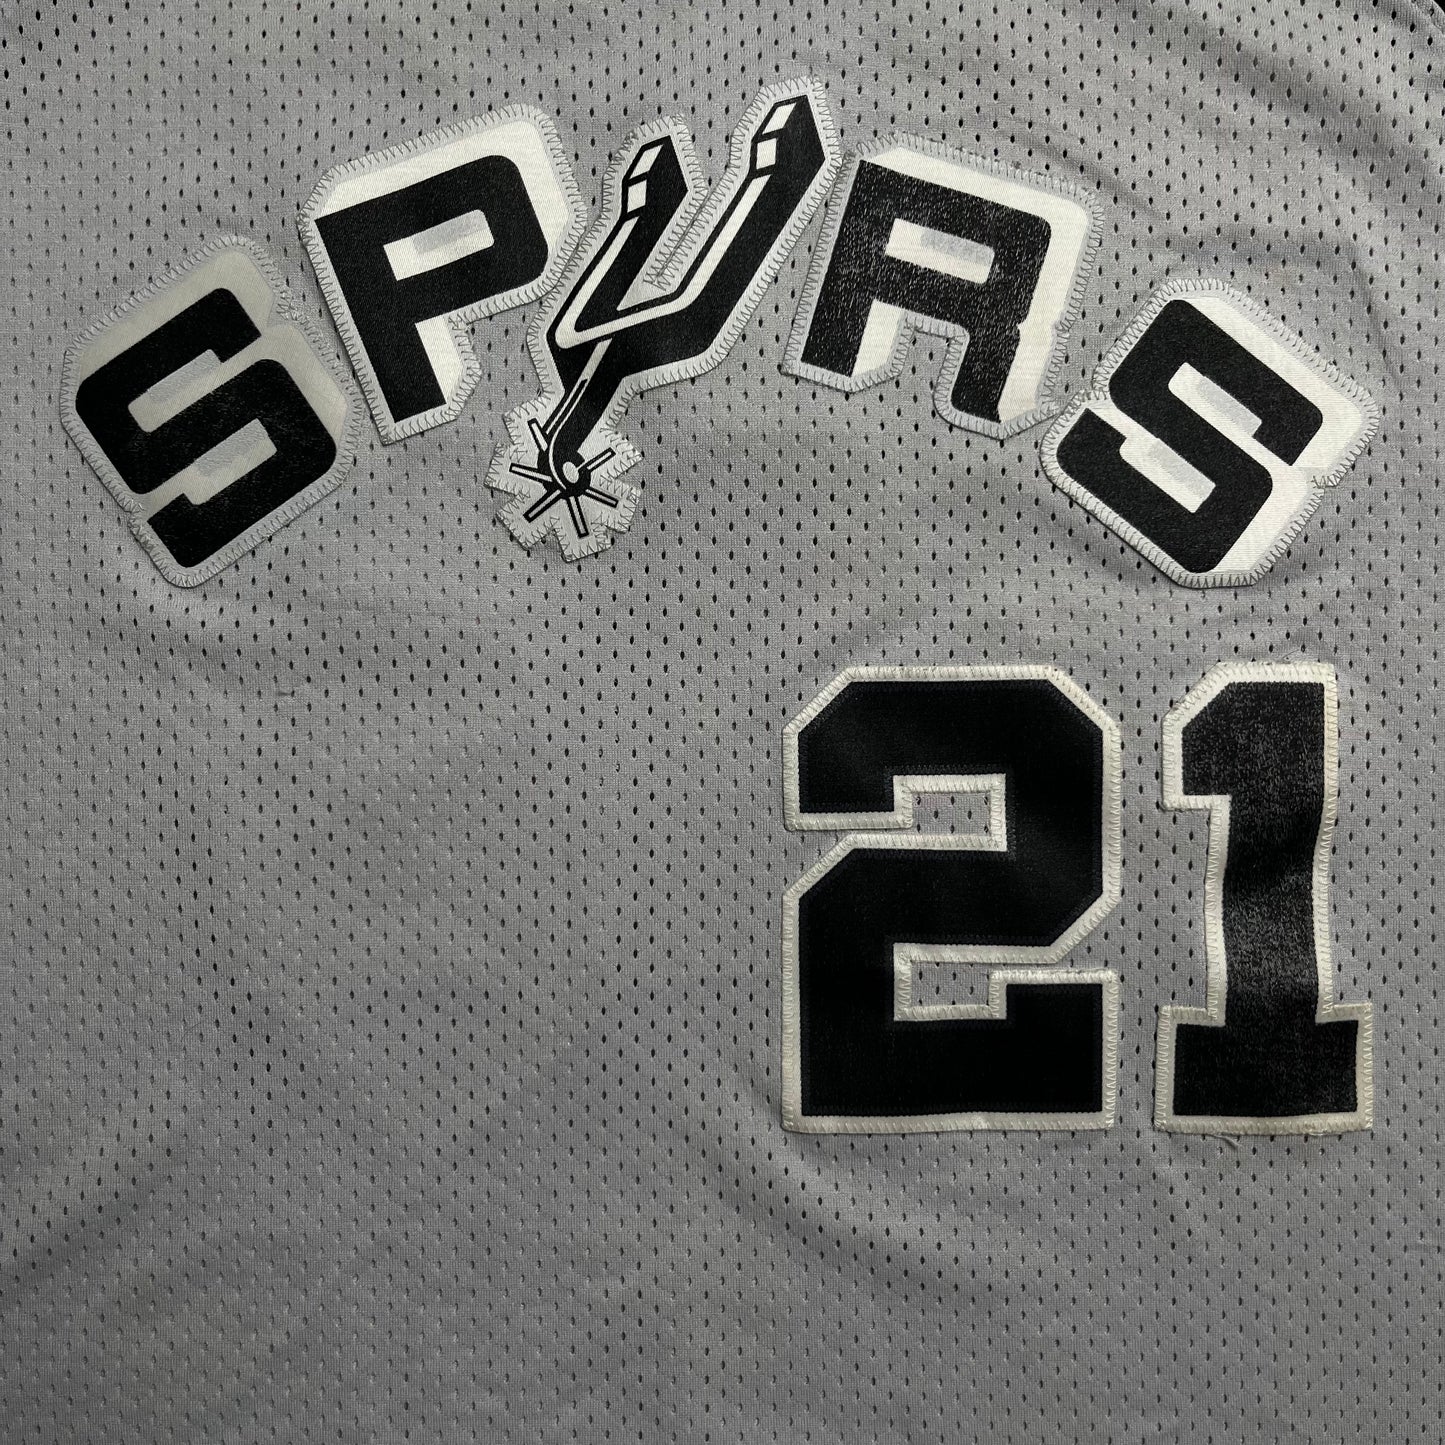 00s San Antonio Spurs Tim Duncan Jersey (M)